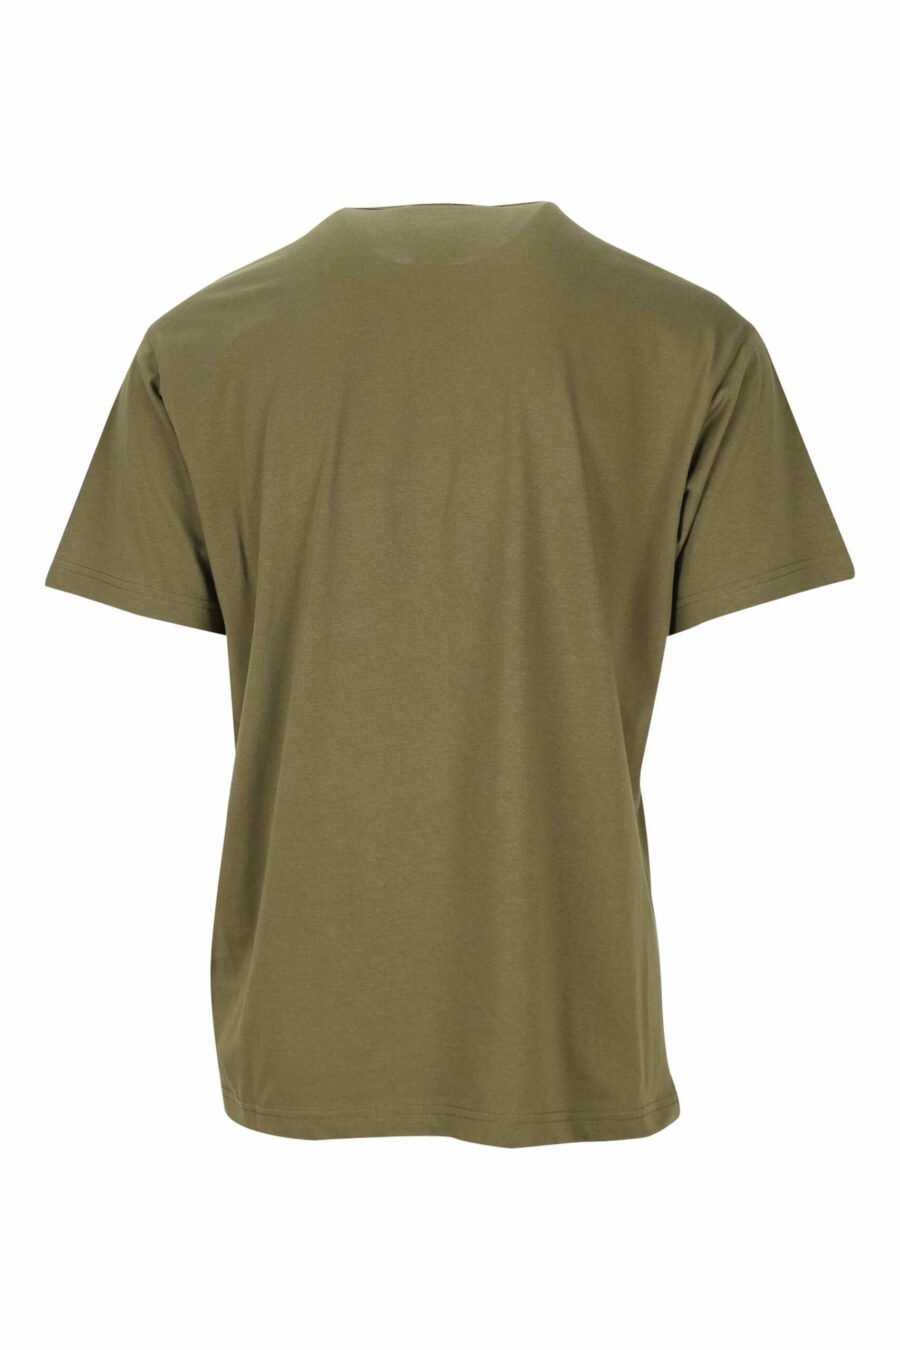 T-shirt verde militar com maxilogue laranja clássico - 8052019468090 1 scaled